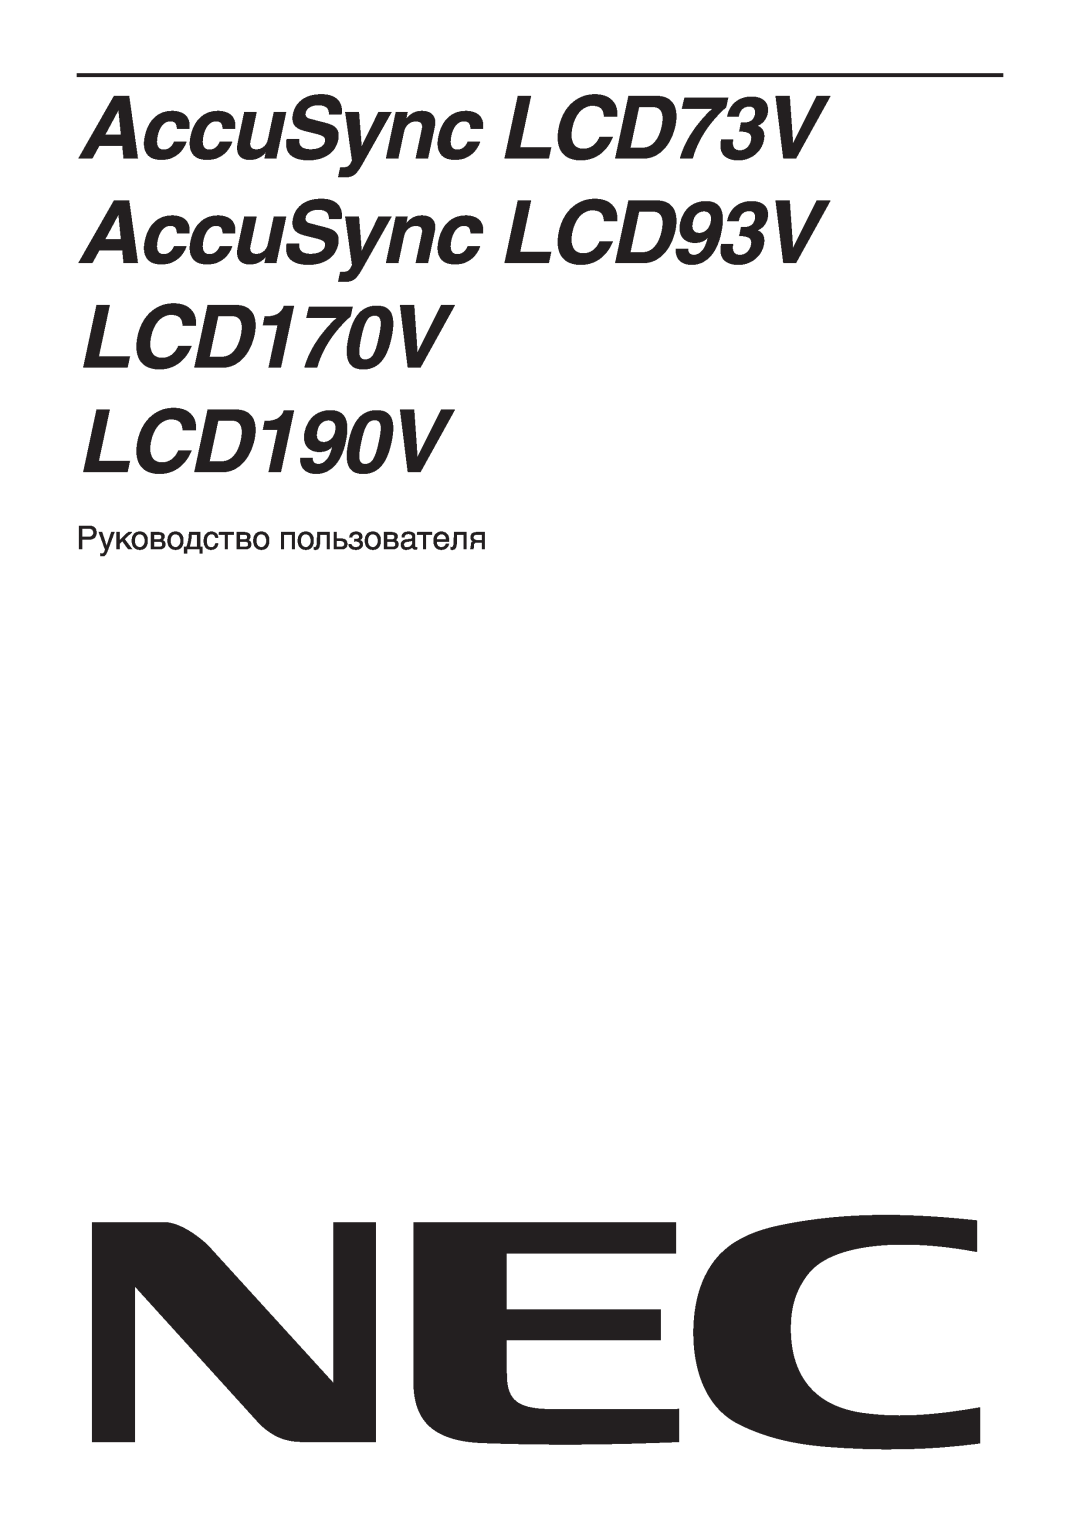 NEC ACCUSYNC LCD93V, ACCUSYNC LCD73V manual AccuSync LCD73V AccuSync LCD93V LCD170V LCD190V, Руководство пользователя 